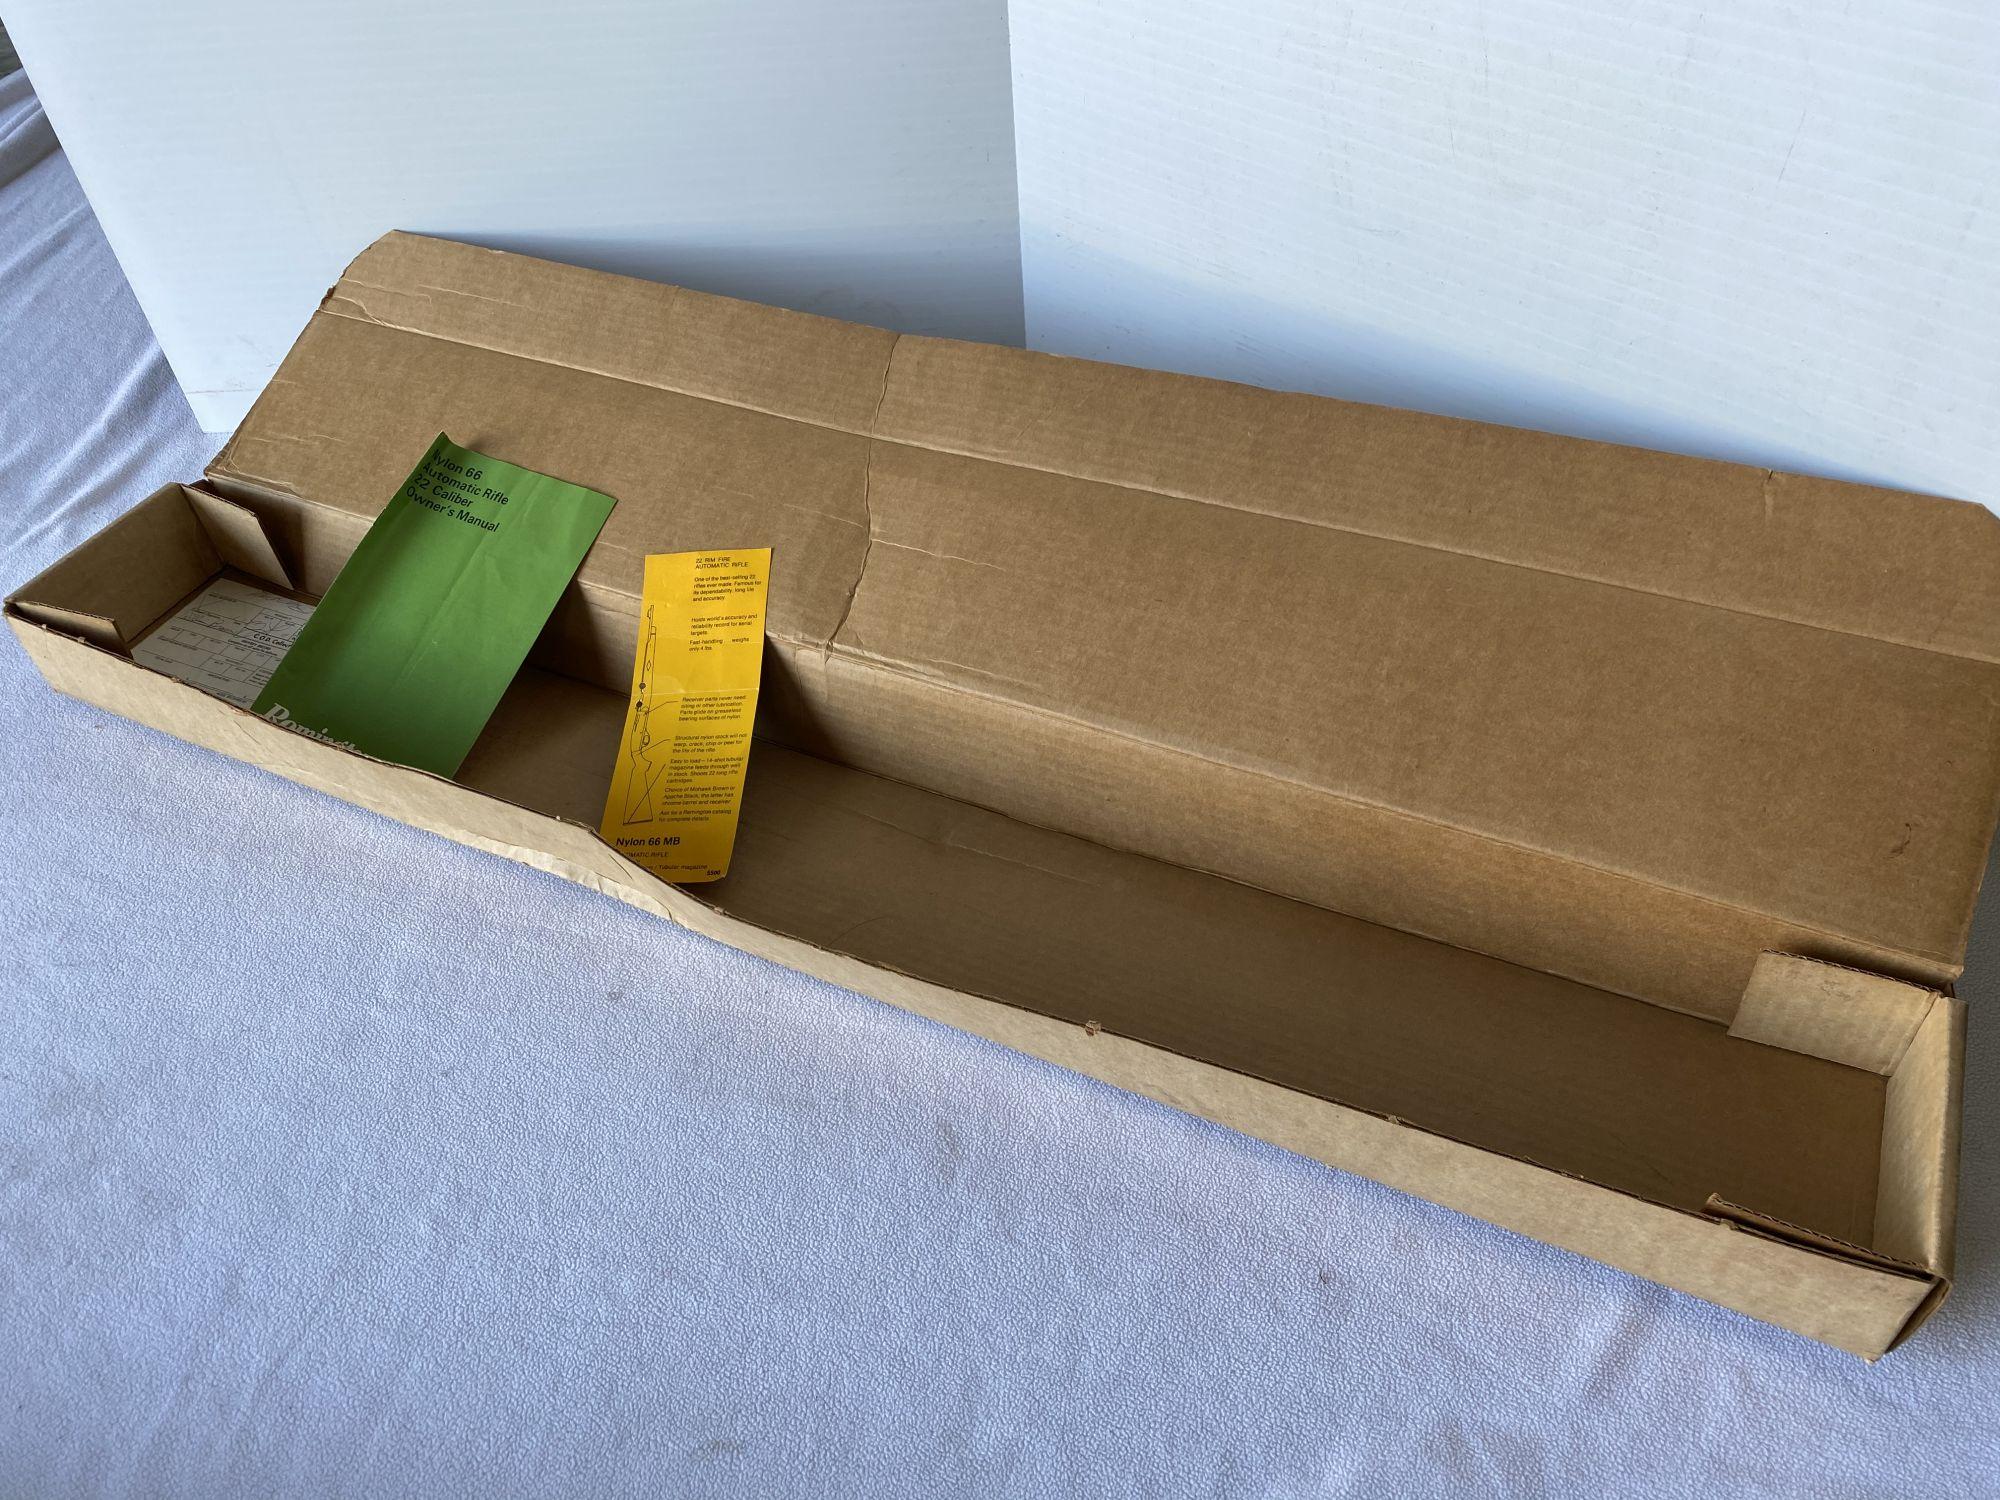 Original Remington Mohawk nylon 66 box with paperwork